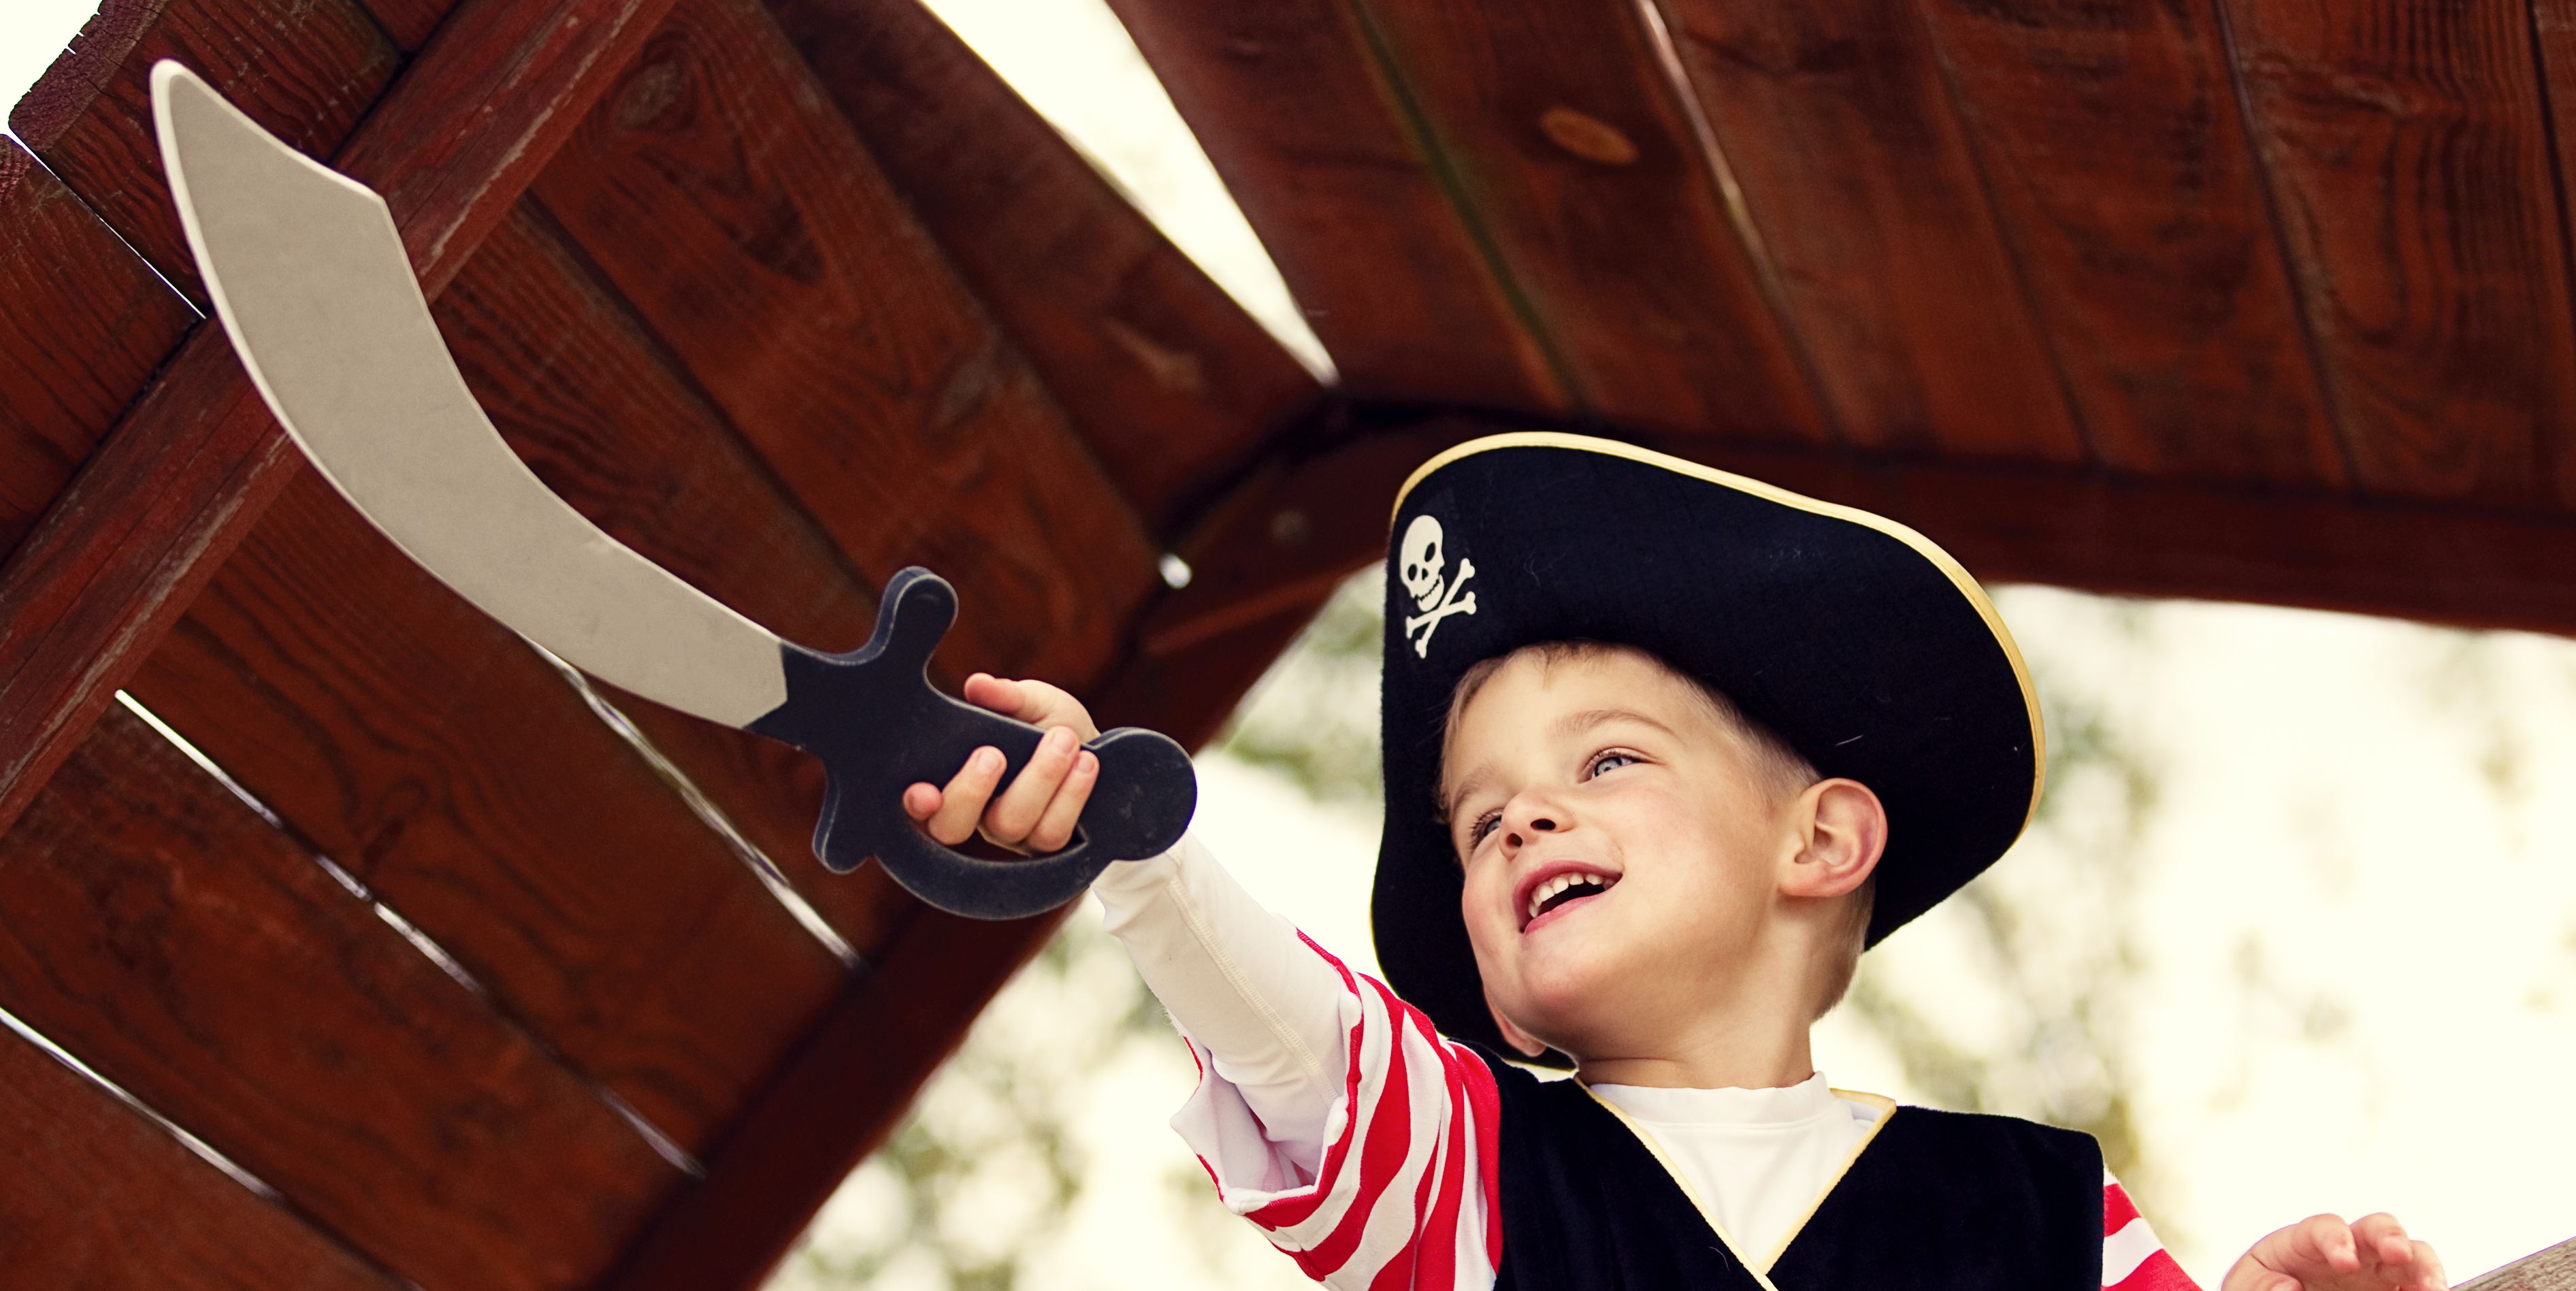 homemade pirate costume for boys